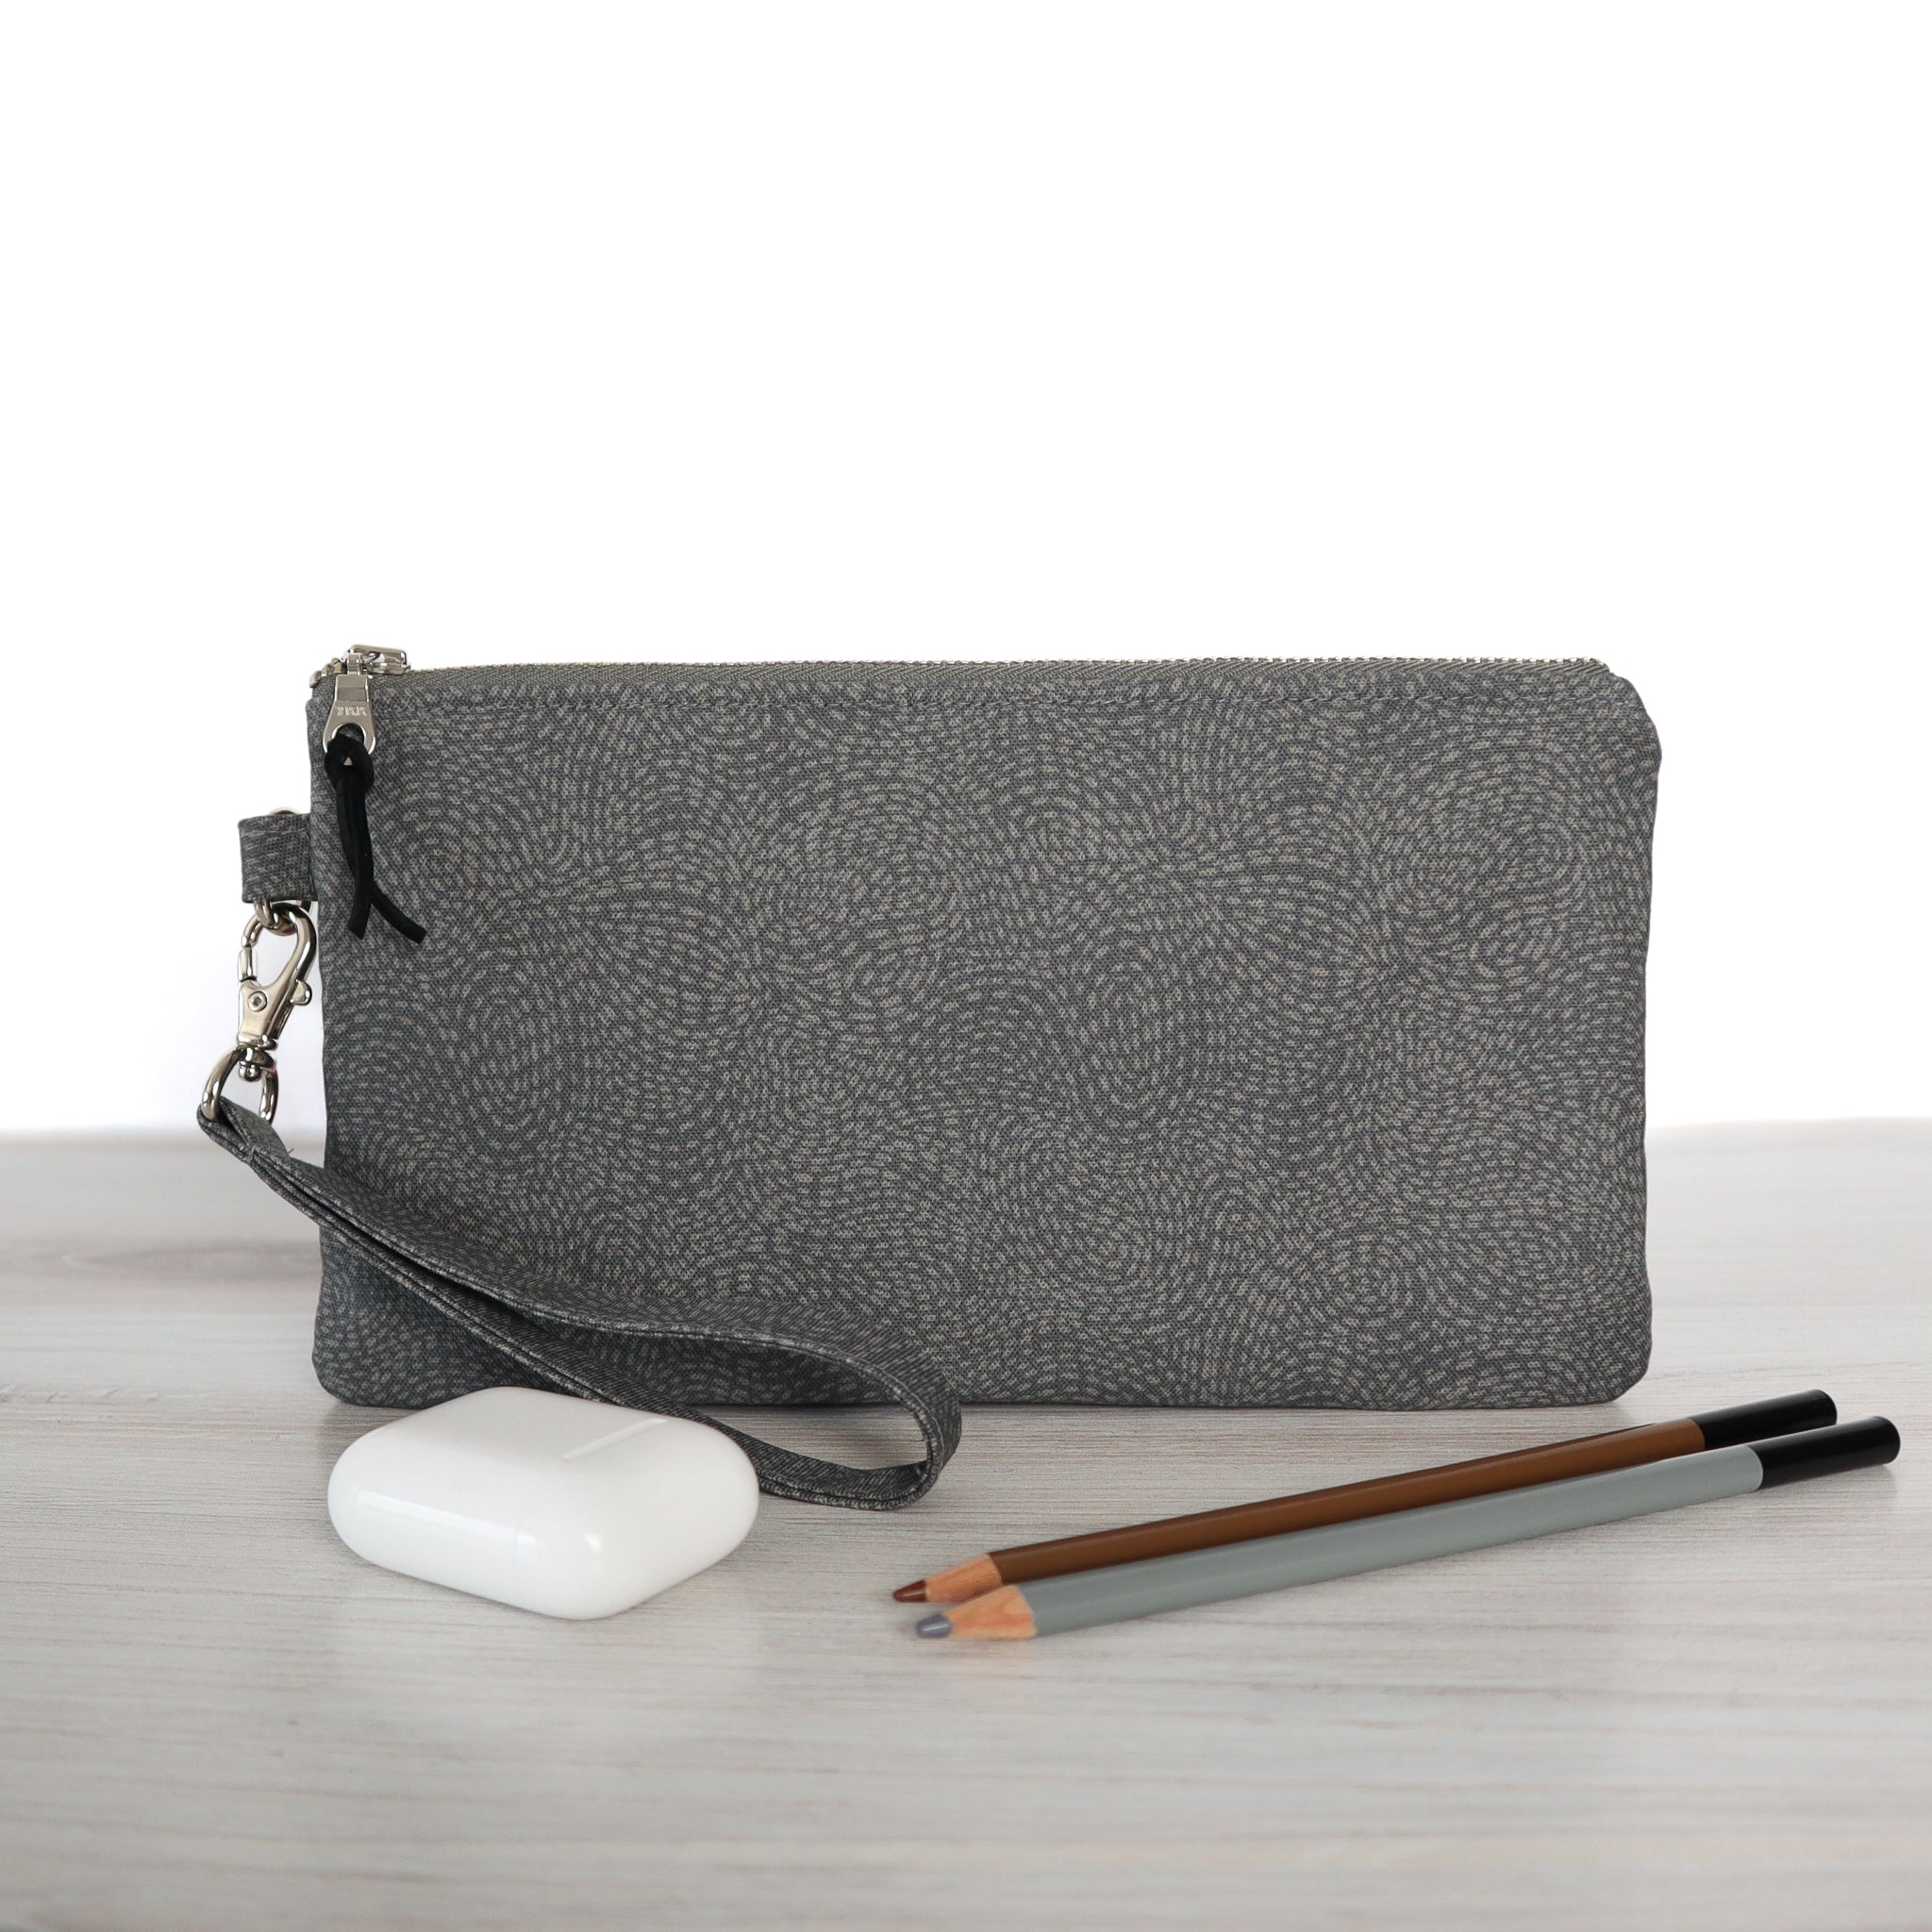 Bag Maker's Sewing Kit Bundle - Belt Bag, Zipper Pouch & Wristlet